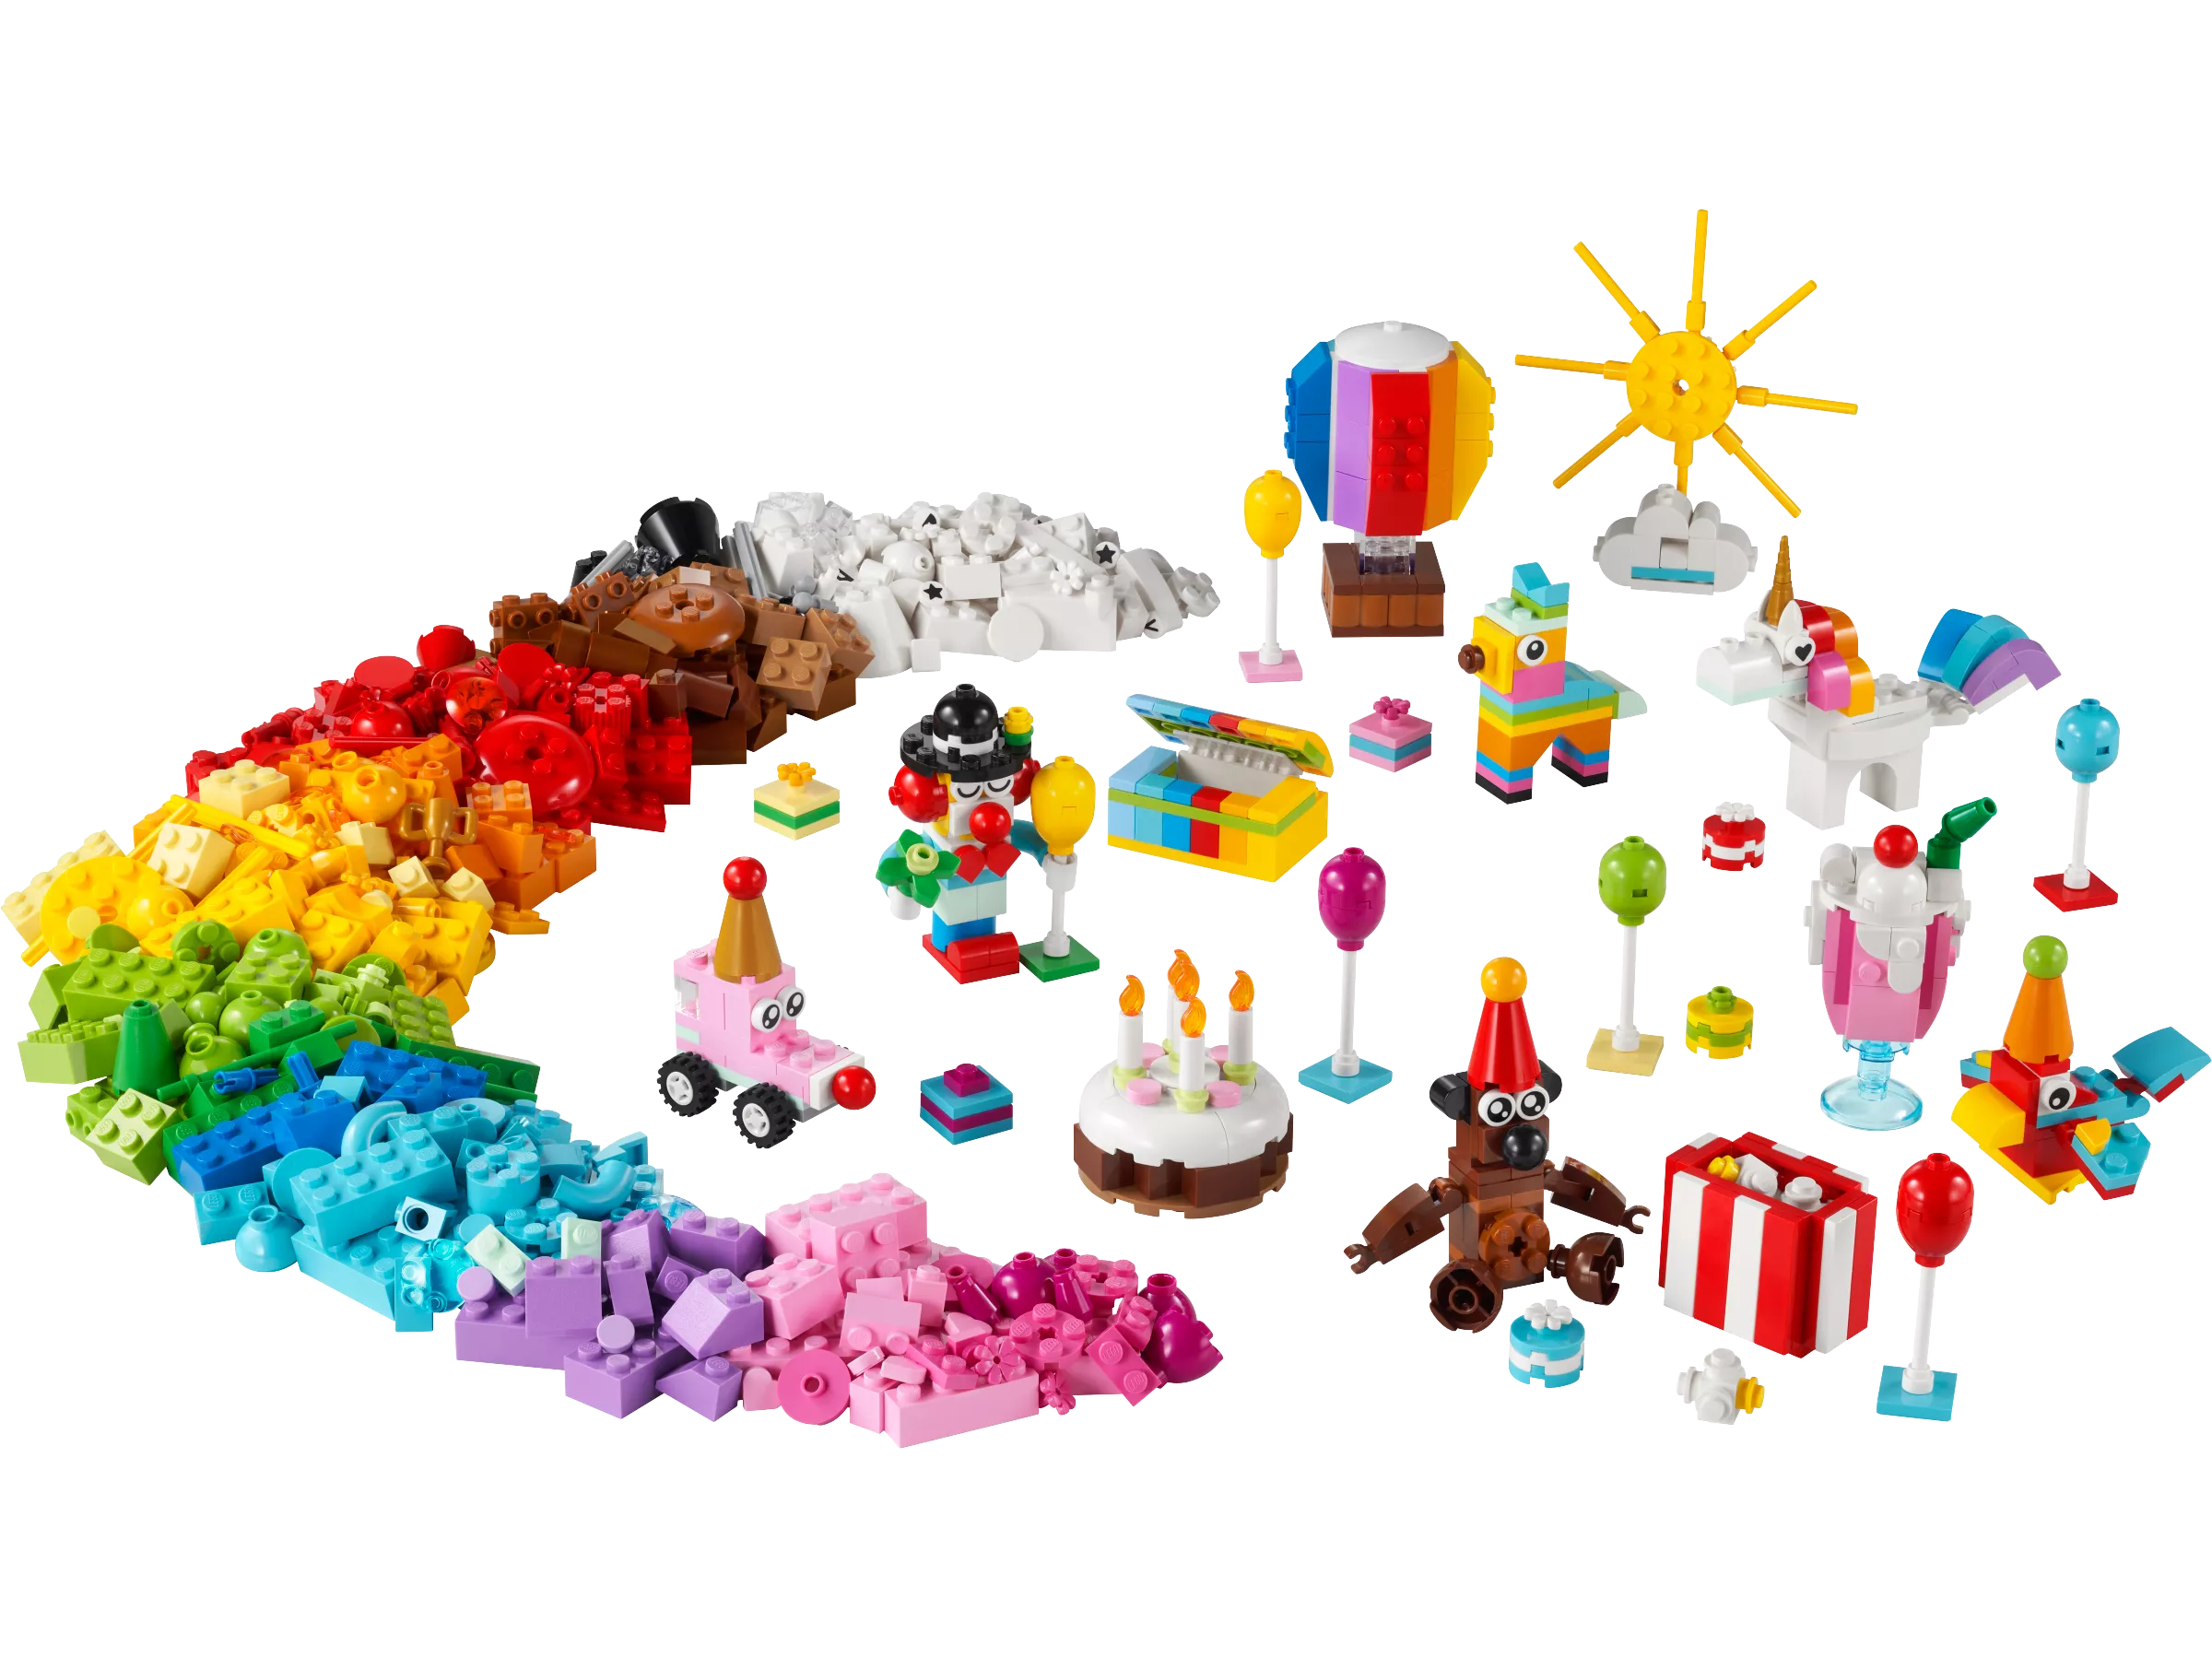 LEGO 11029 Party Kreativ-Bauset